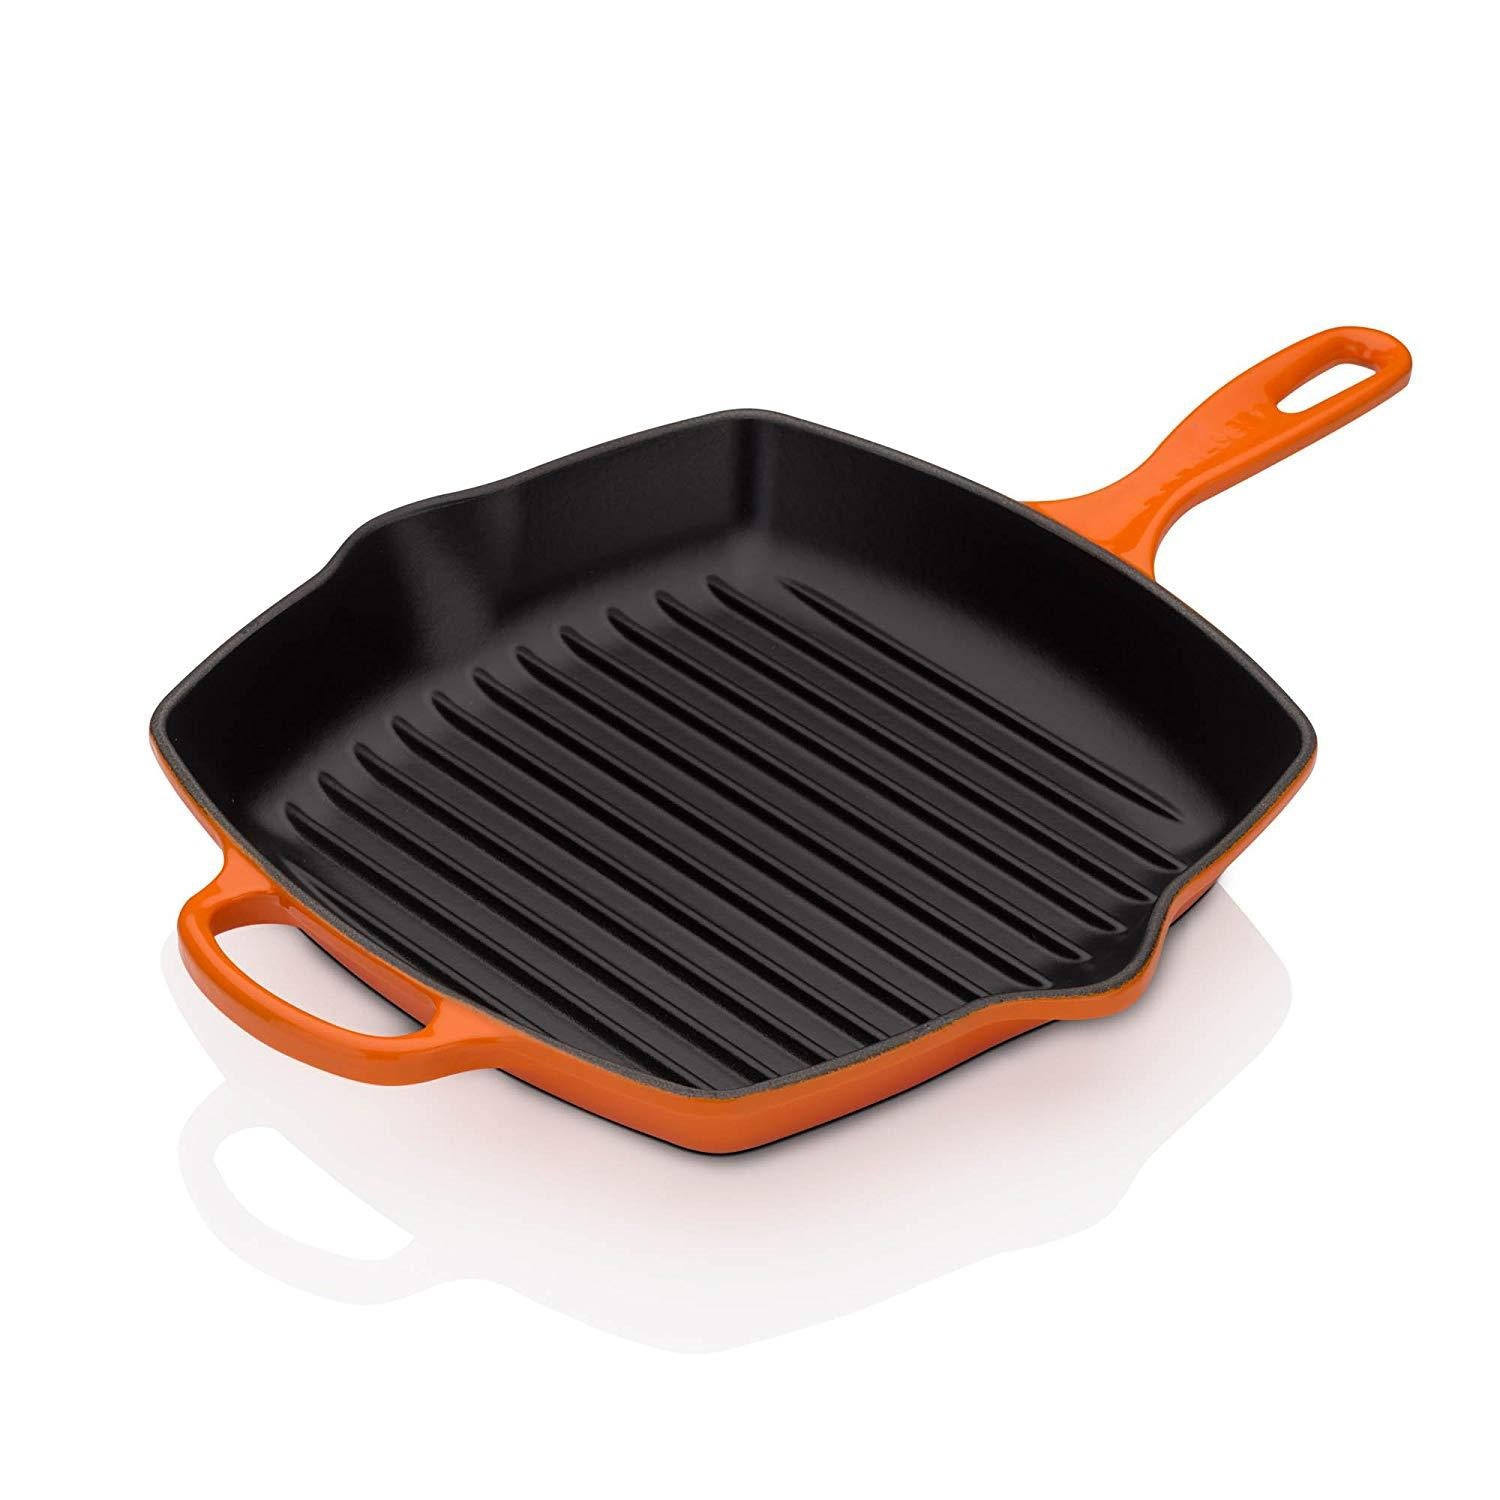 Le Creuset grill pan/skillet 26cm square, orange